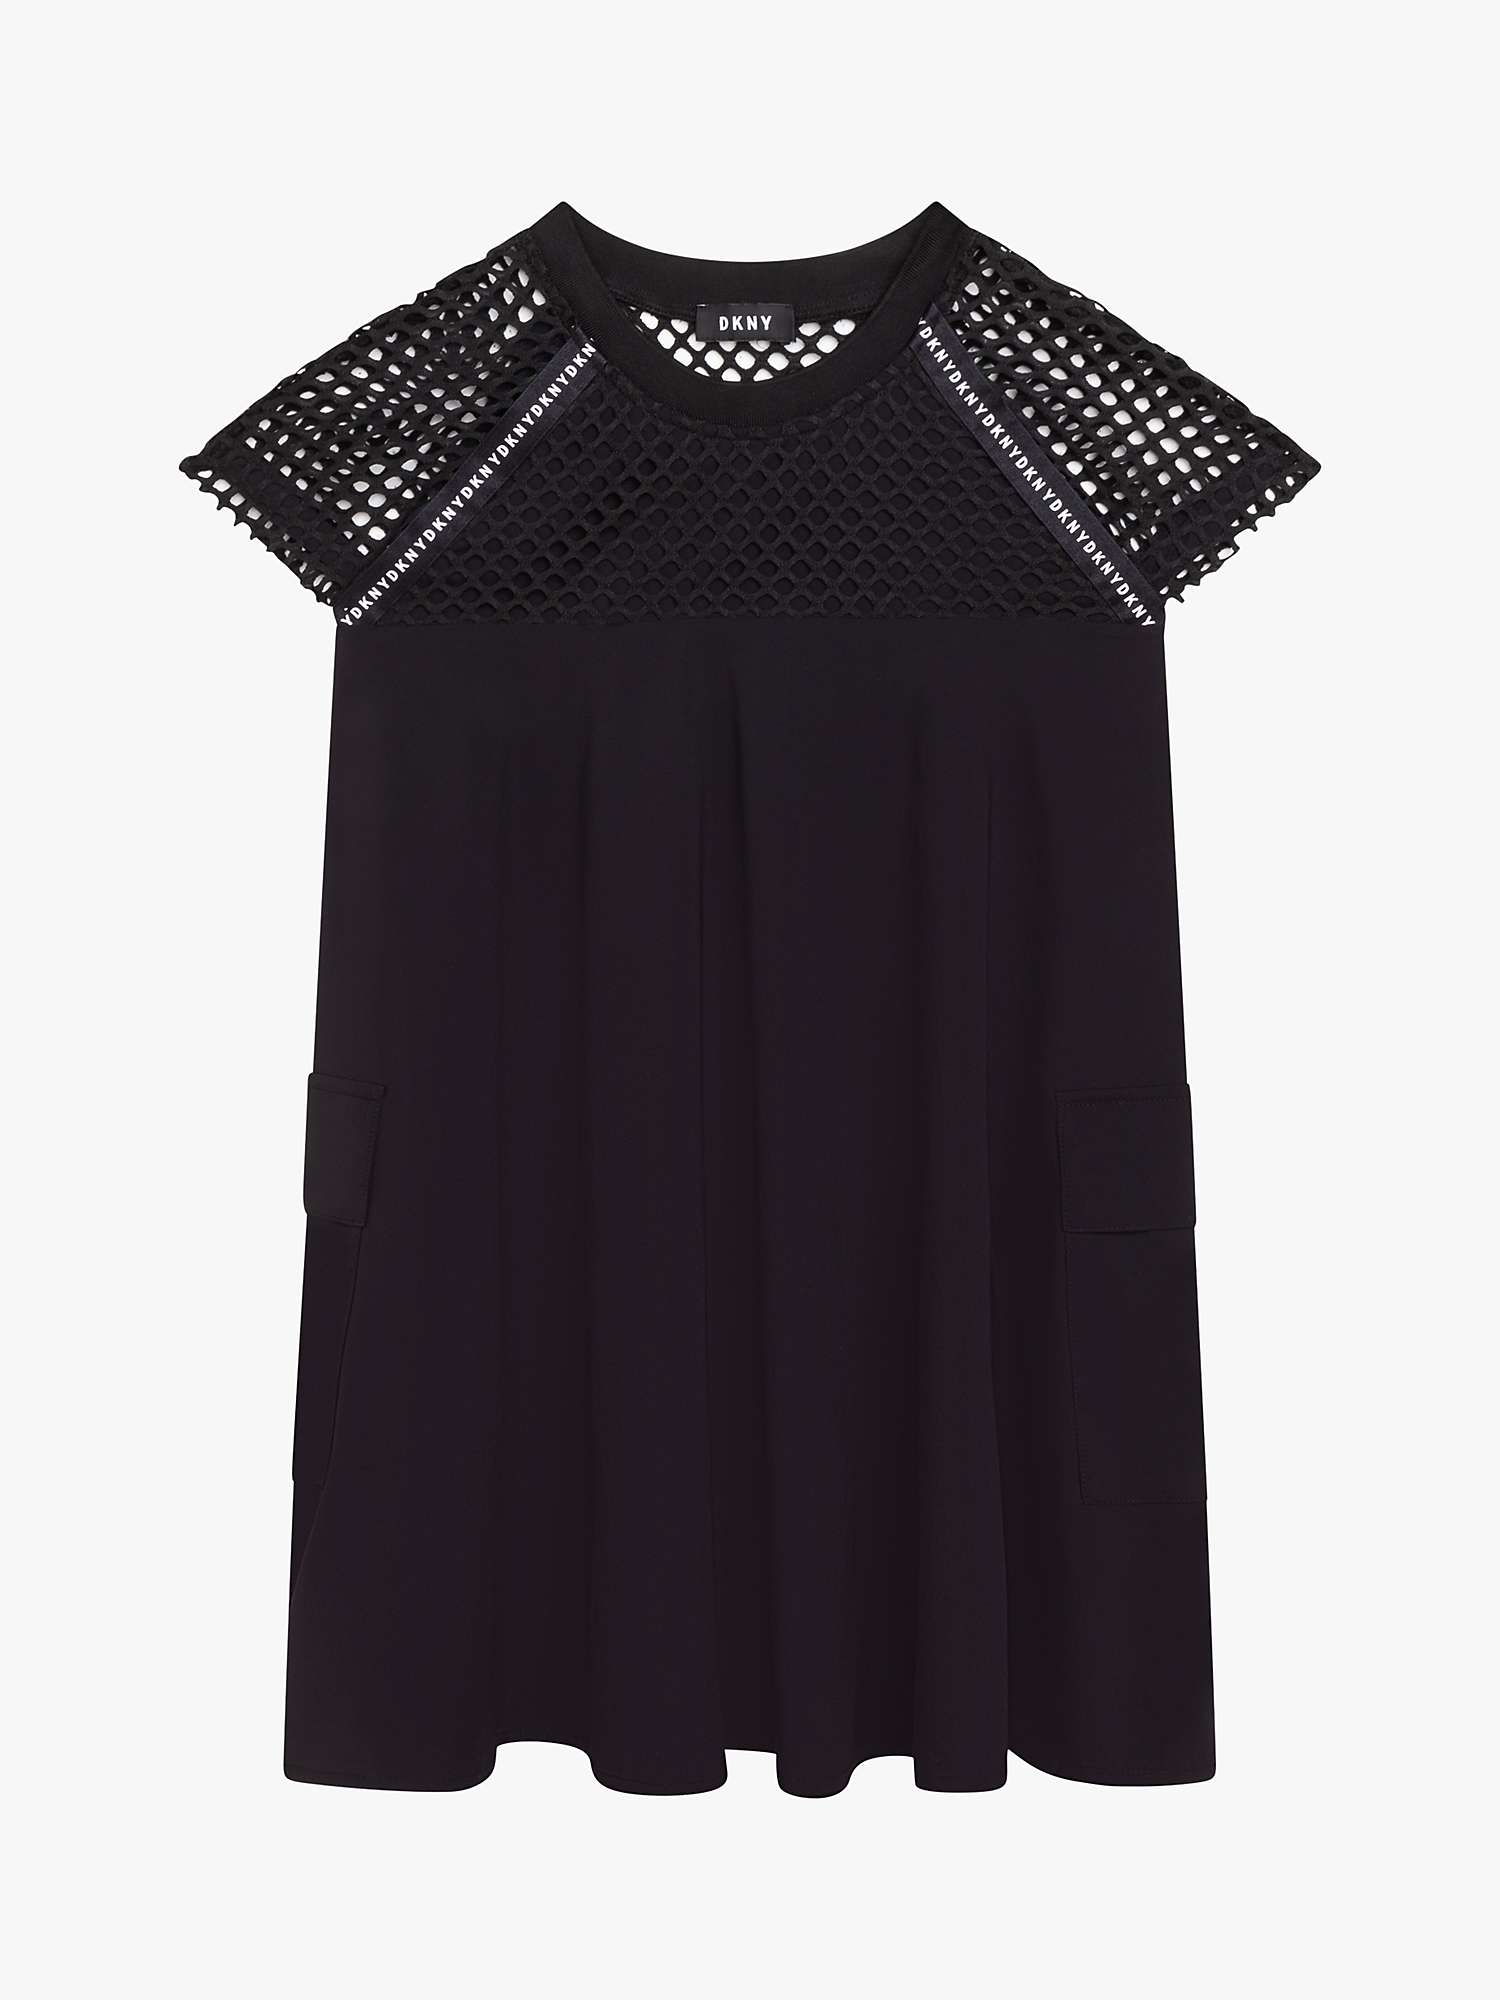 Buy DKNY Kids' Mesh Sleeve Dress, Black Online at johnlewis.com